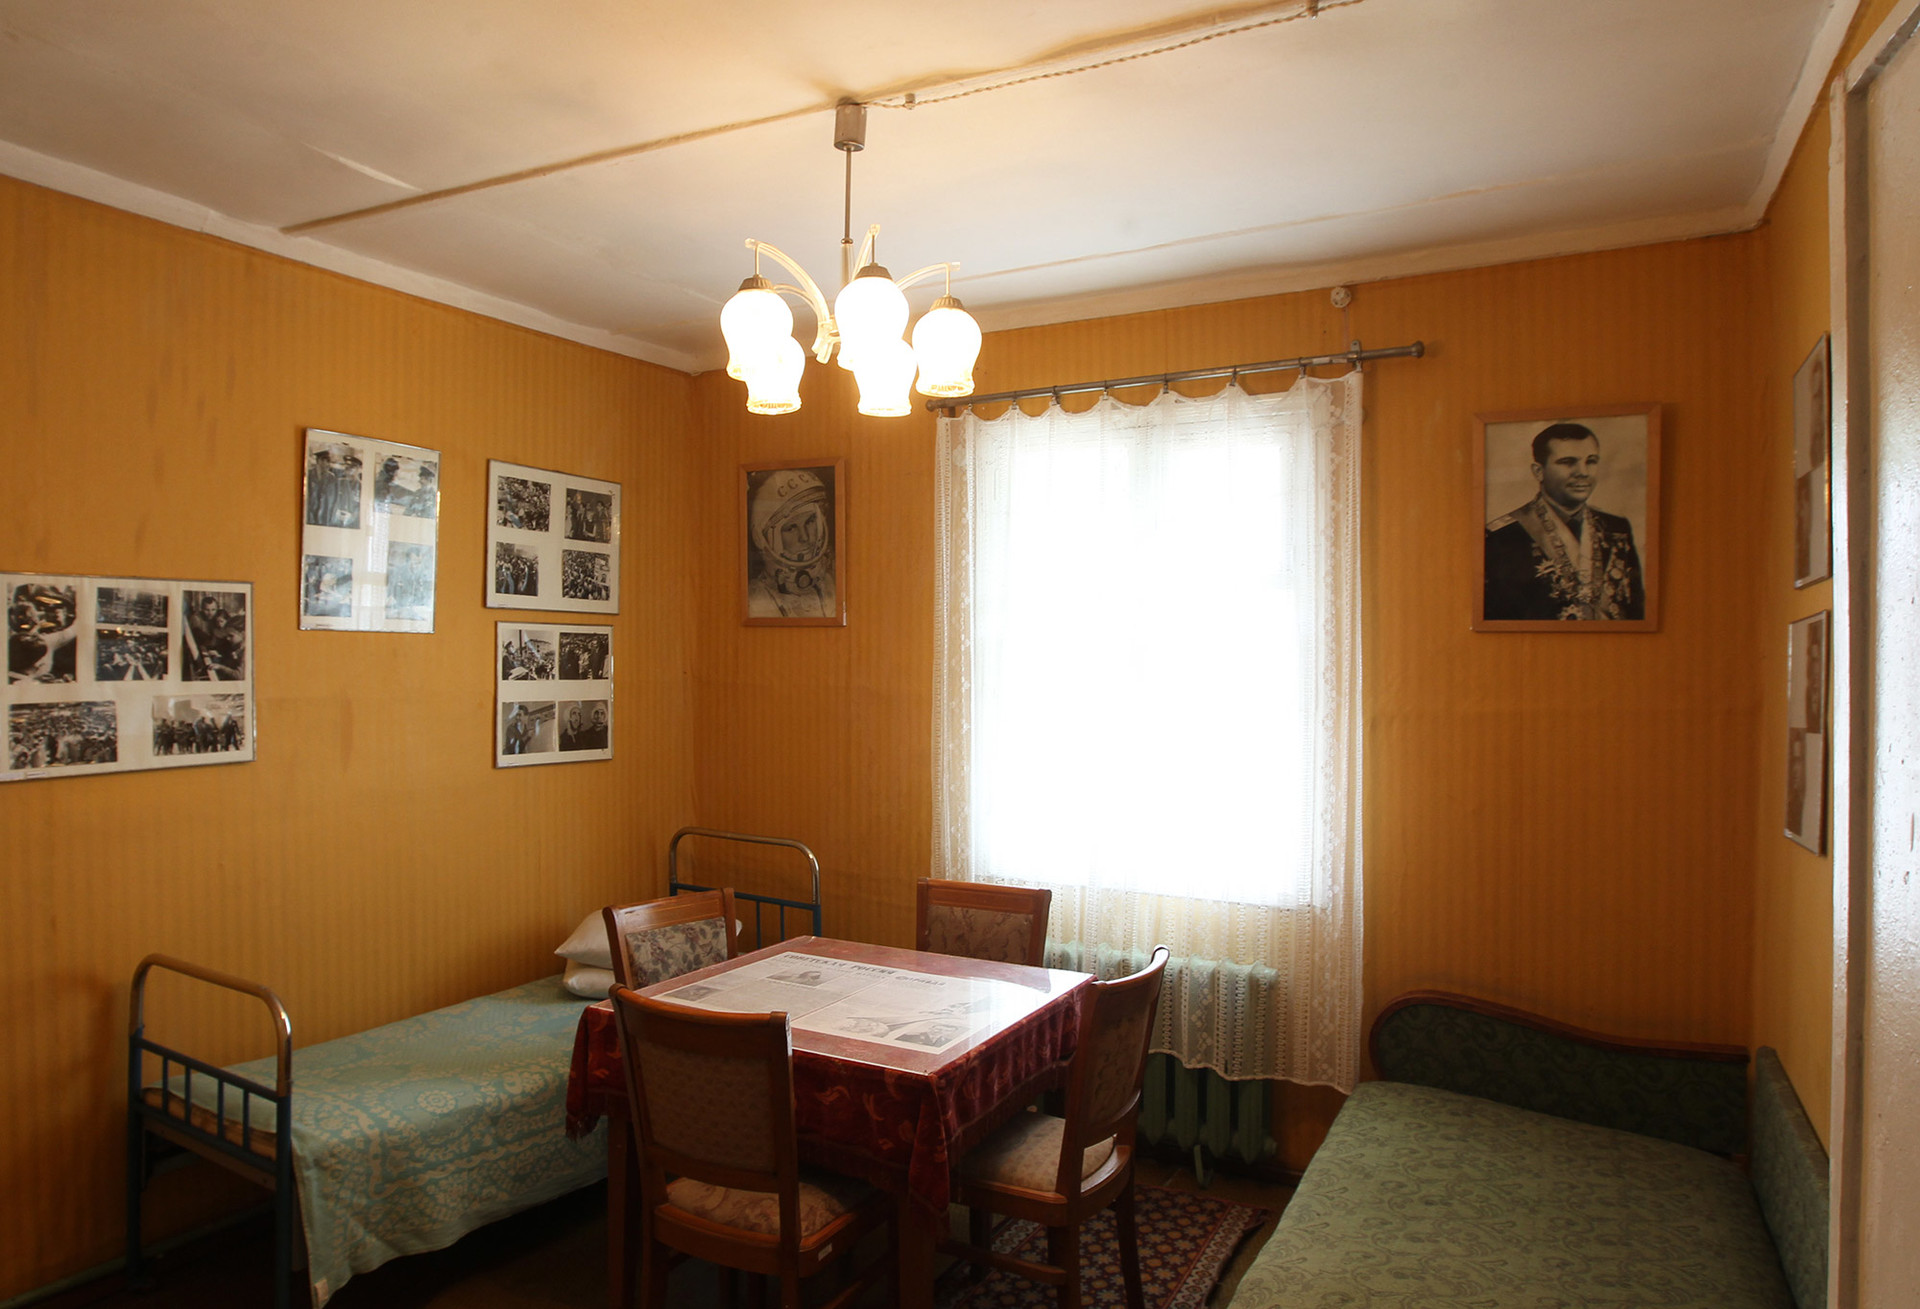 Gagarinova soba, muzej Bajkonura

